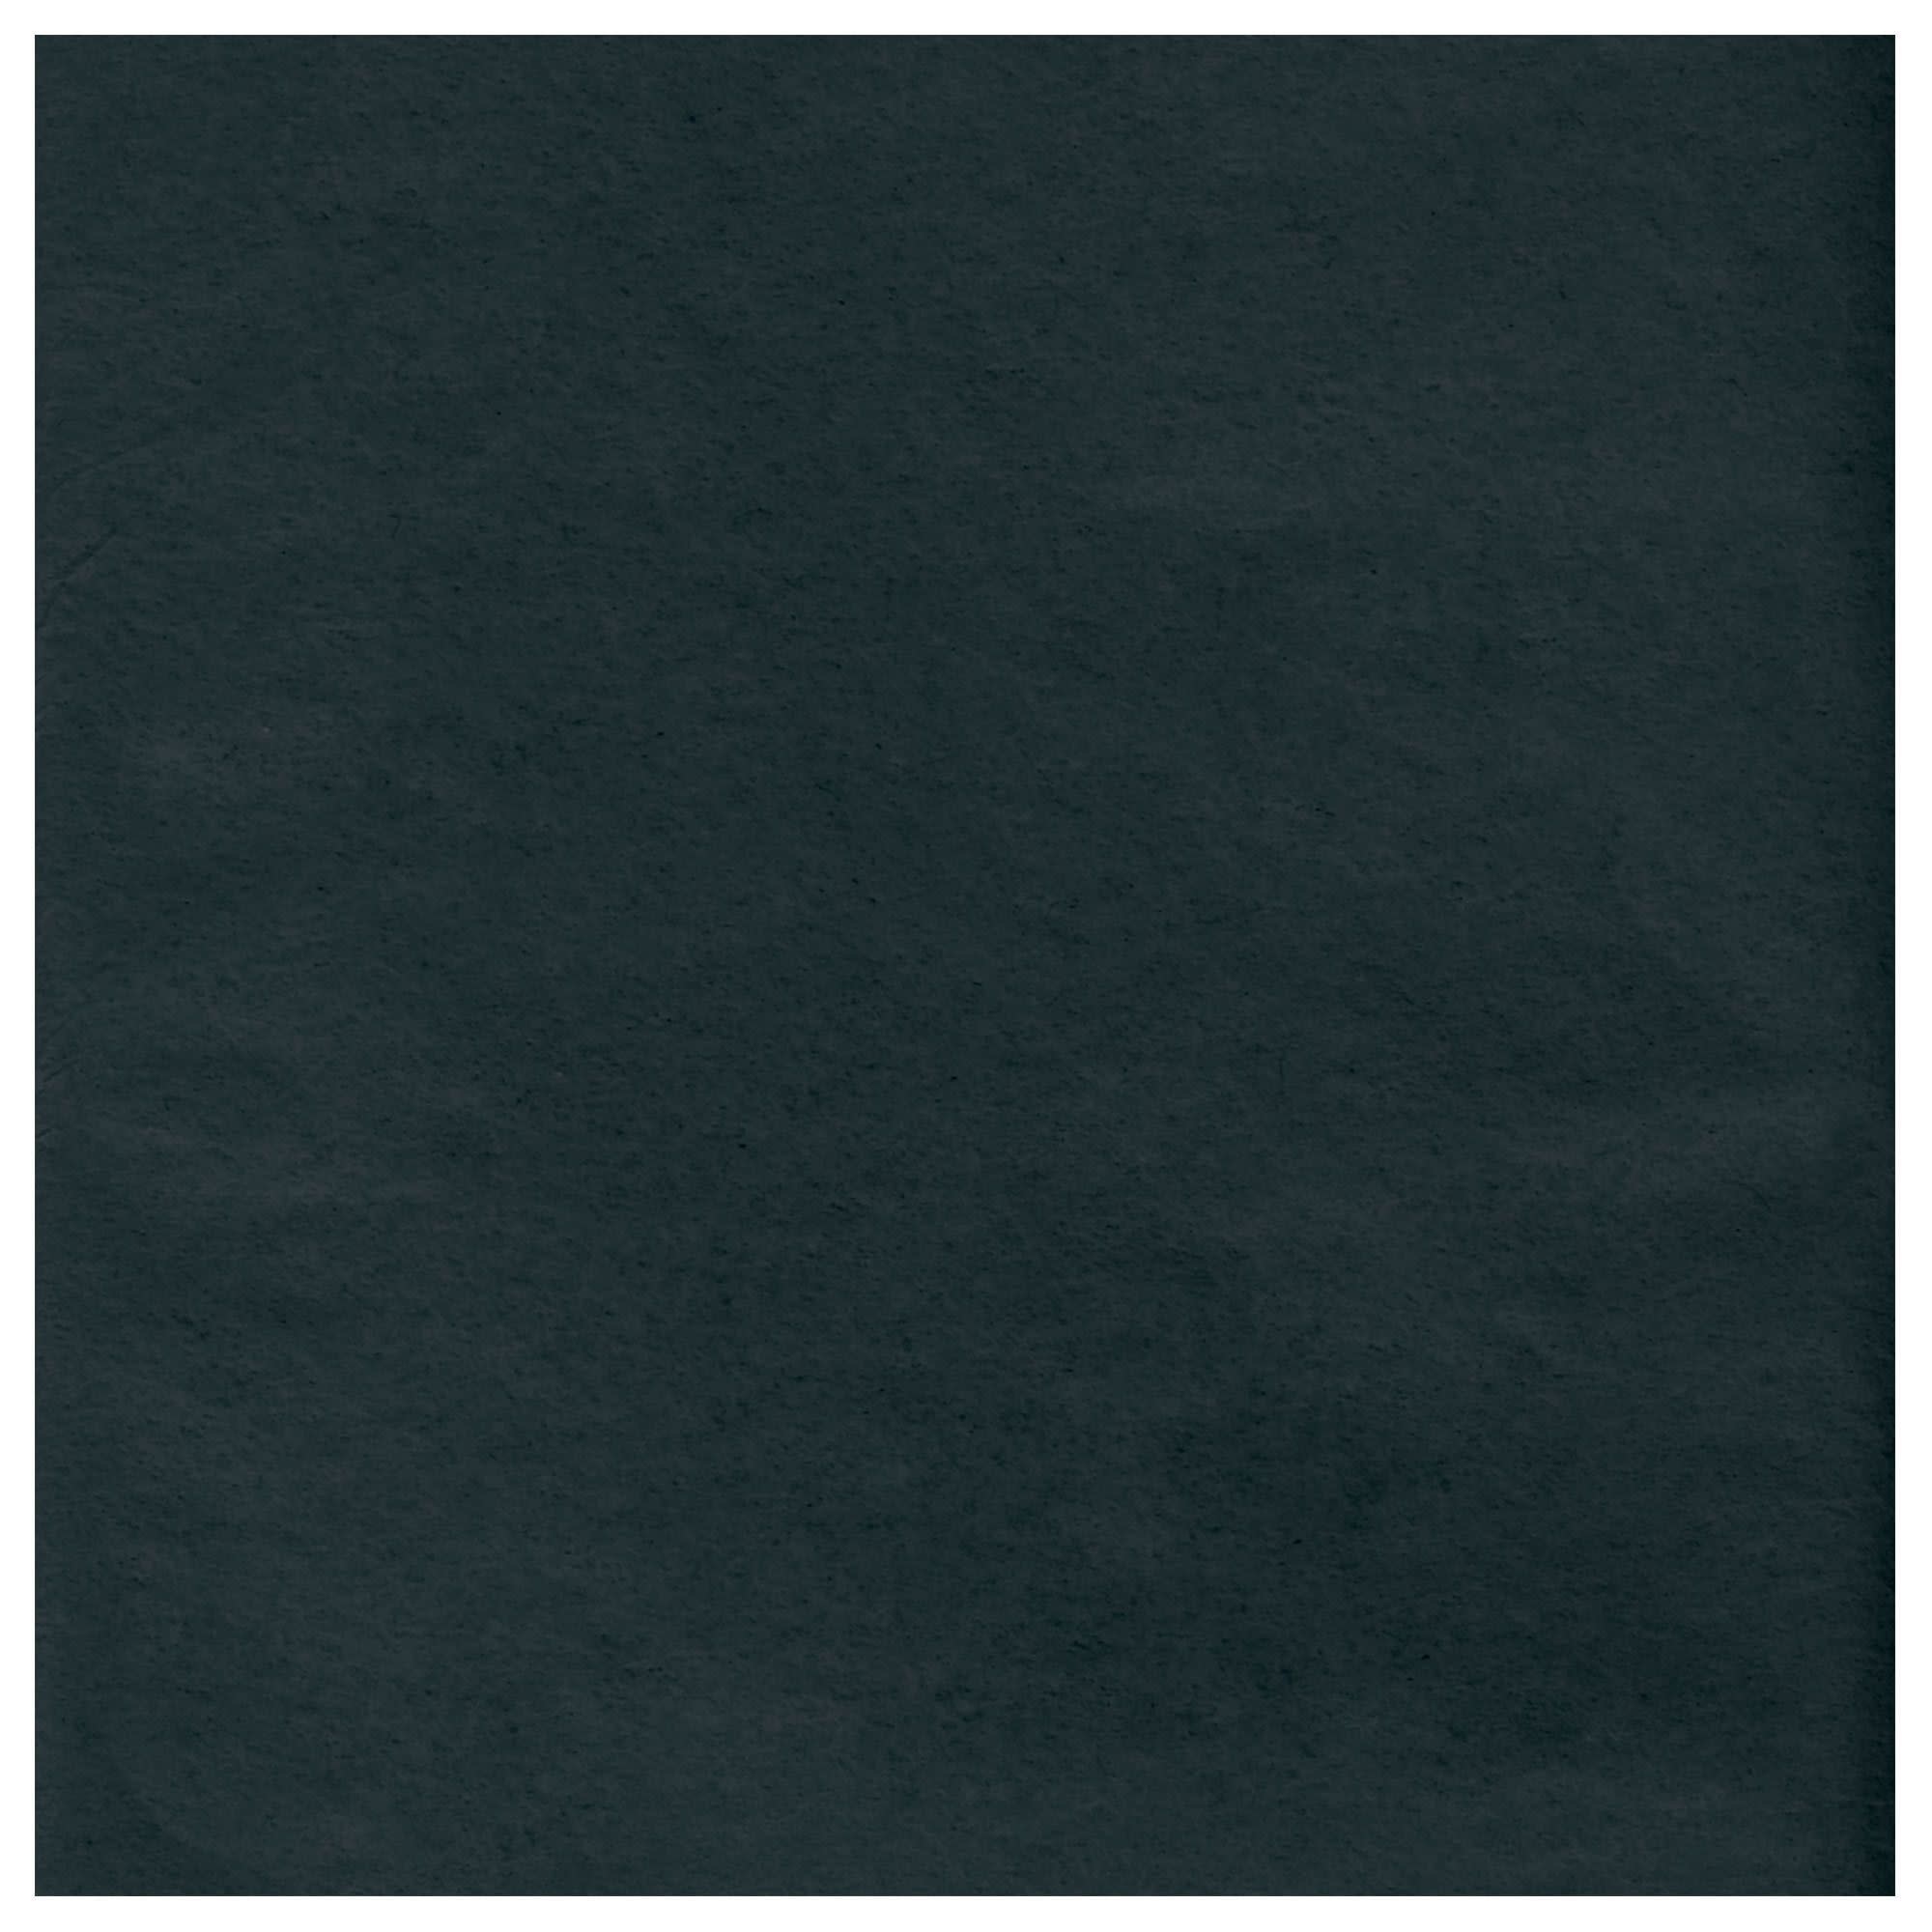 Black Solid Tissue Paper